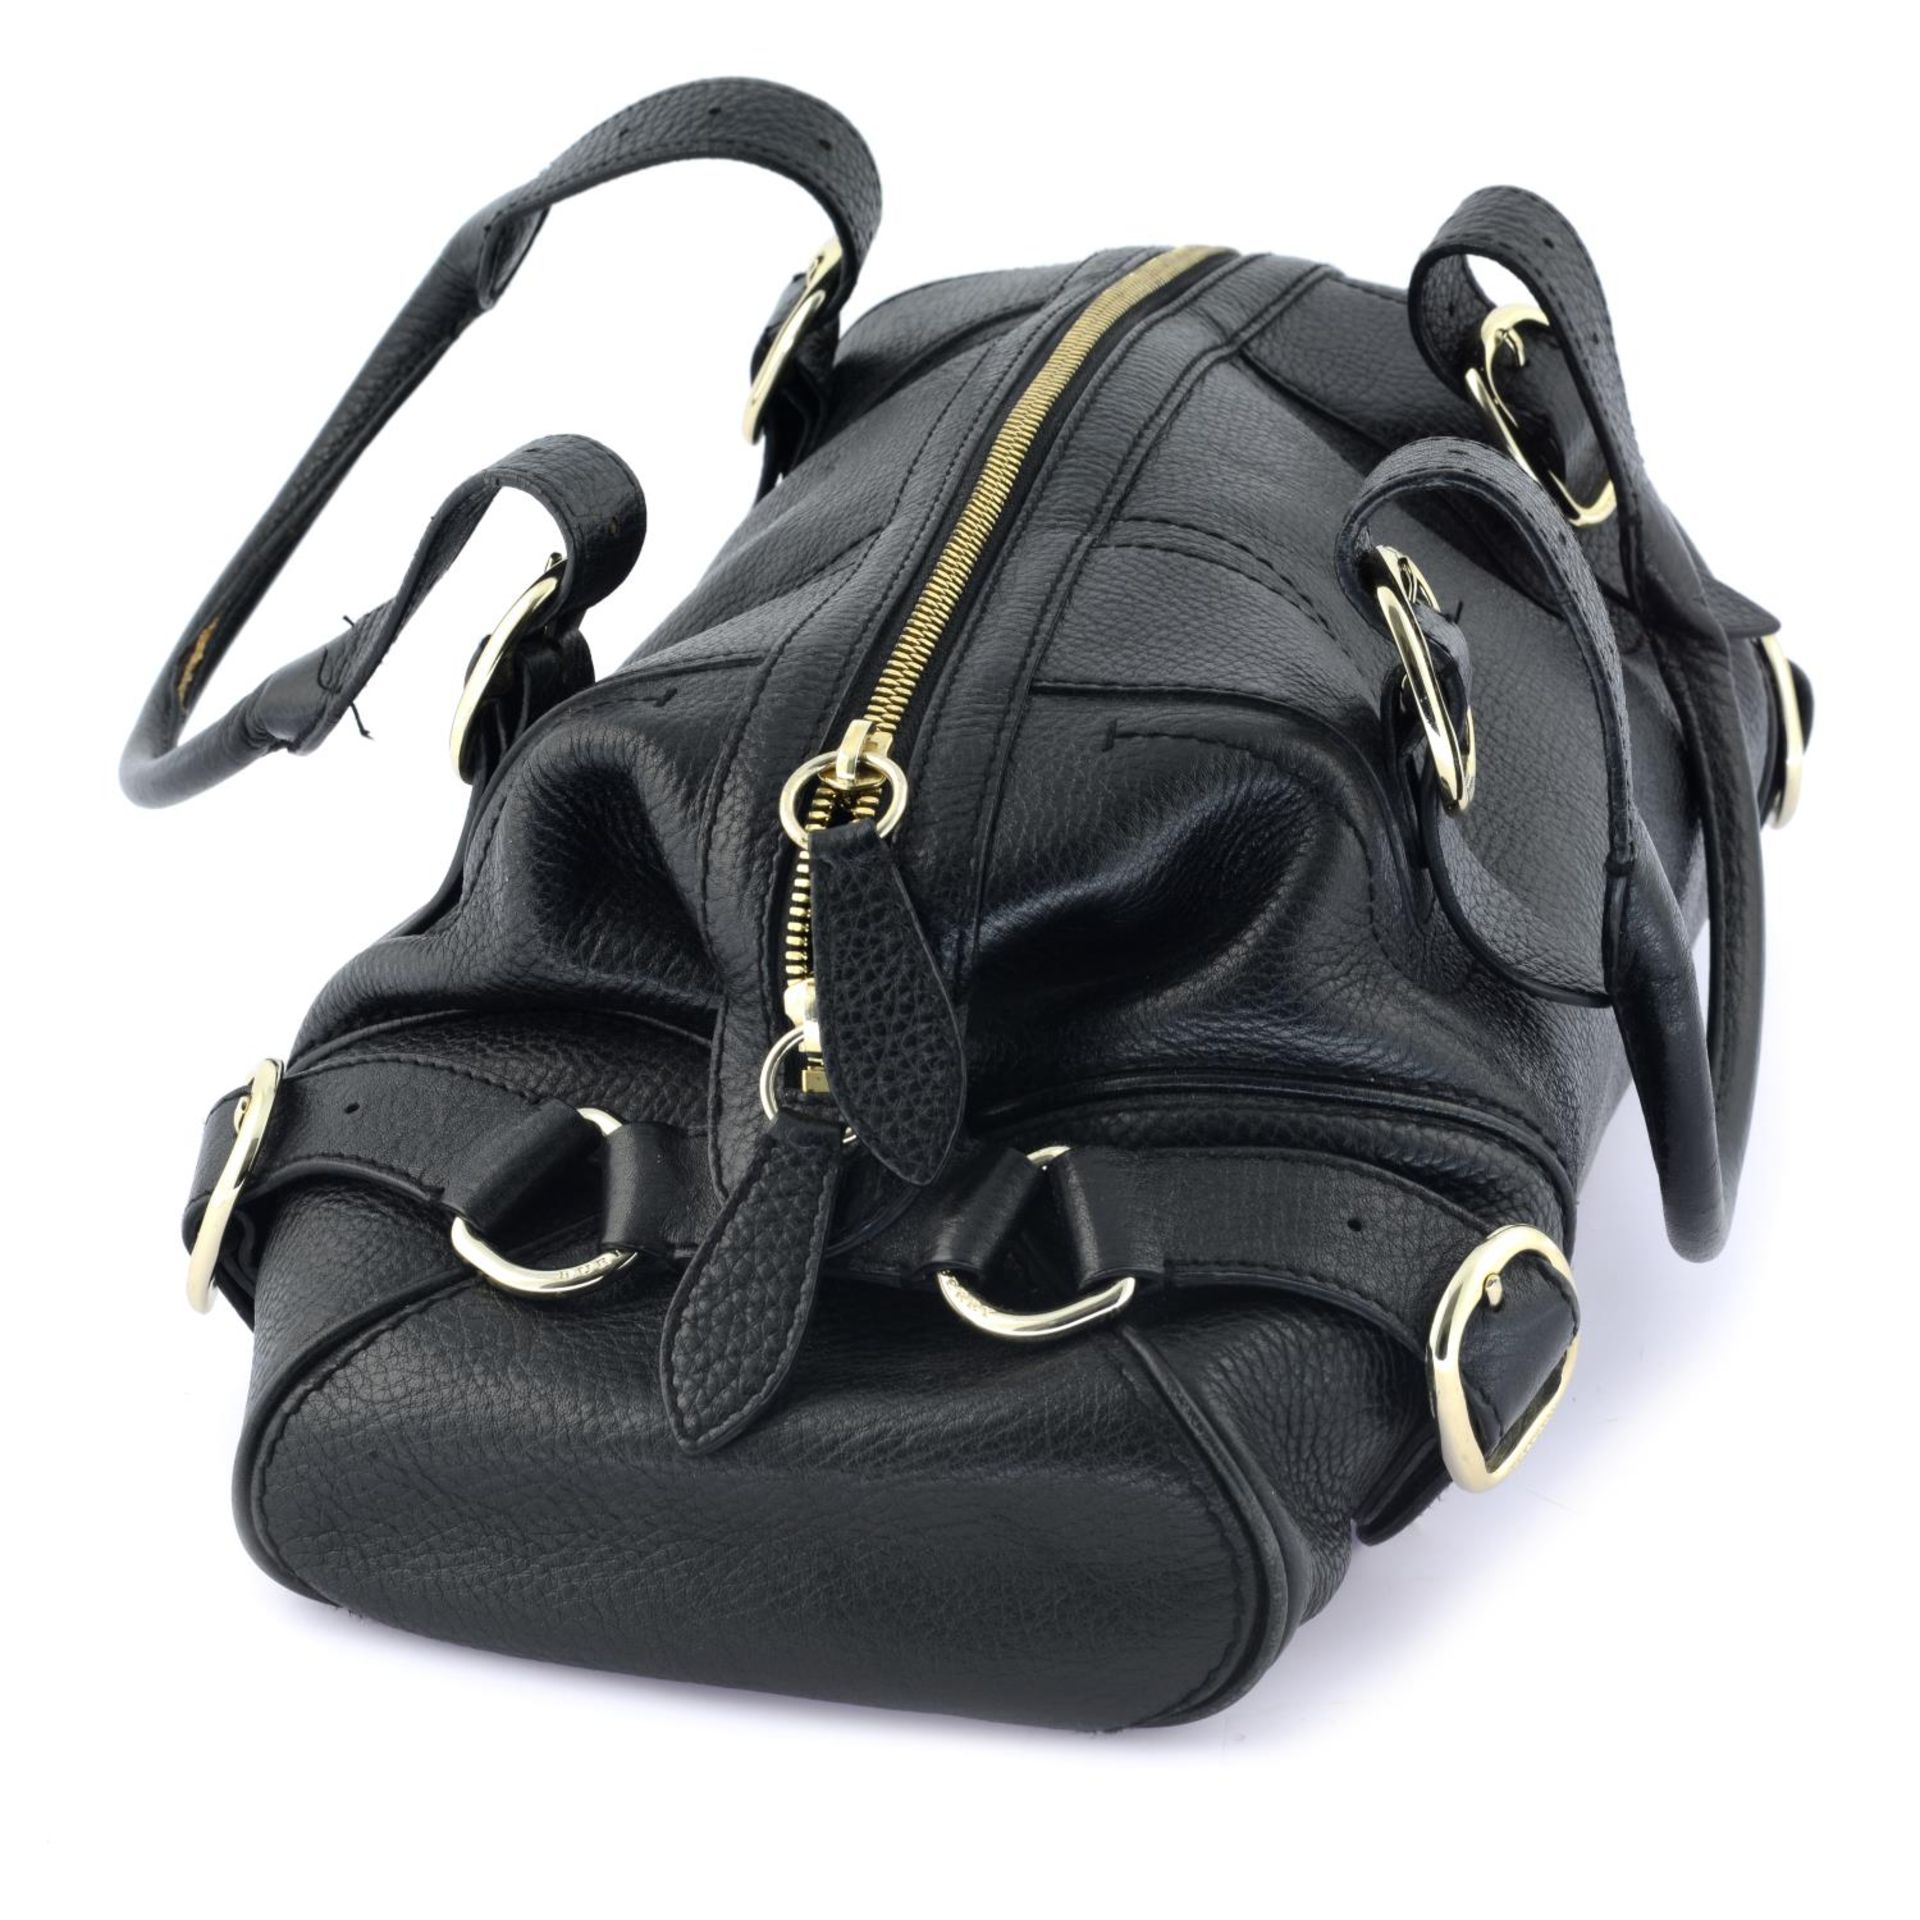 BURBERRY - a black leather handbag. - Image 3 of 7